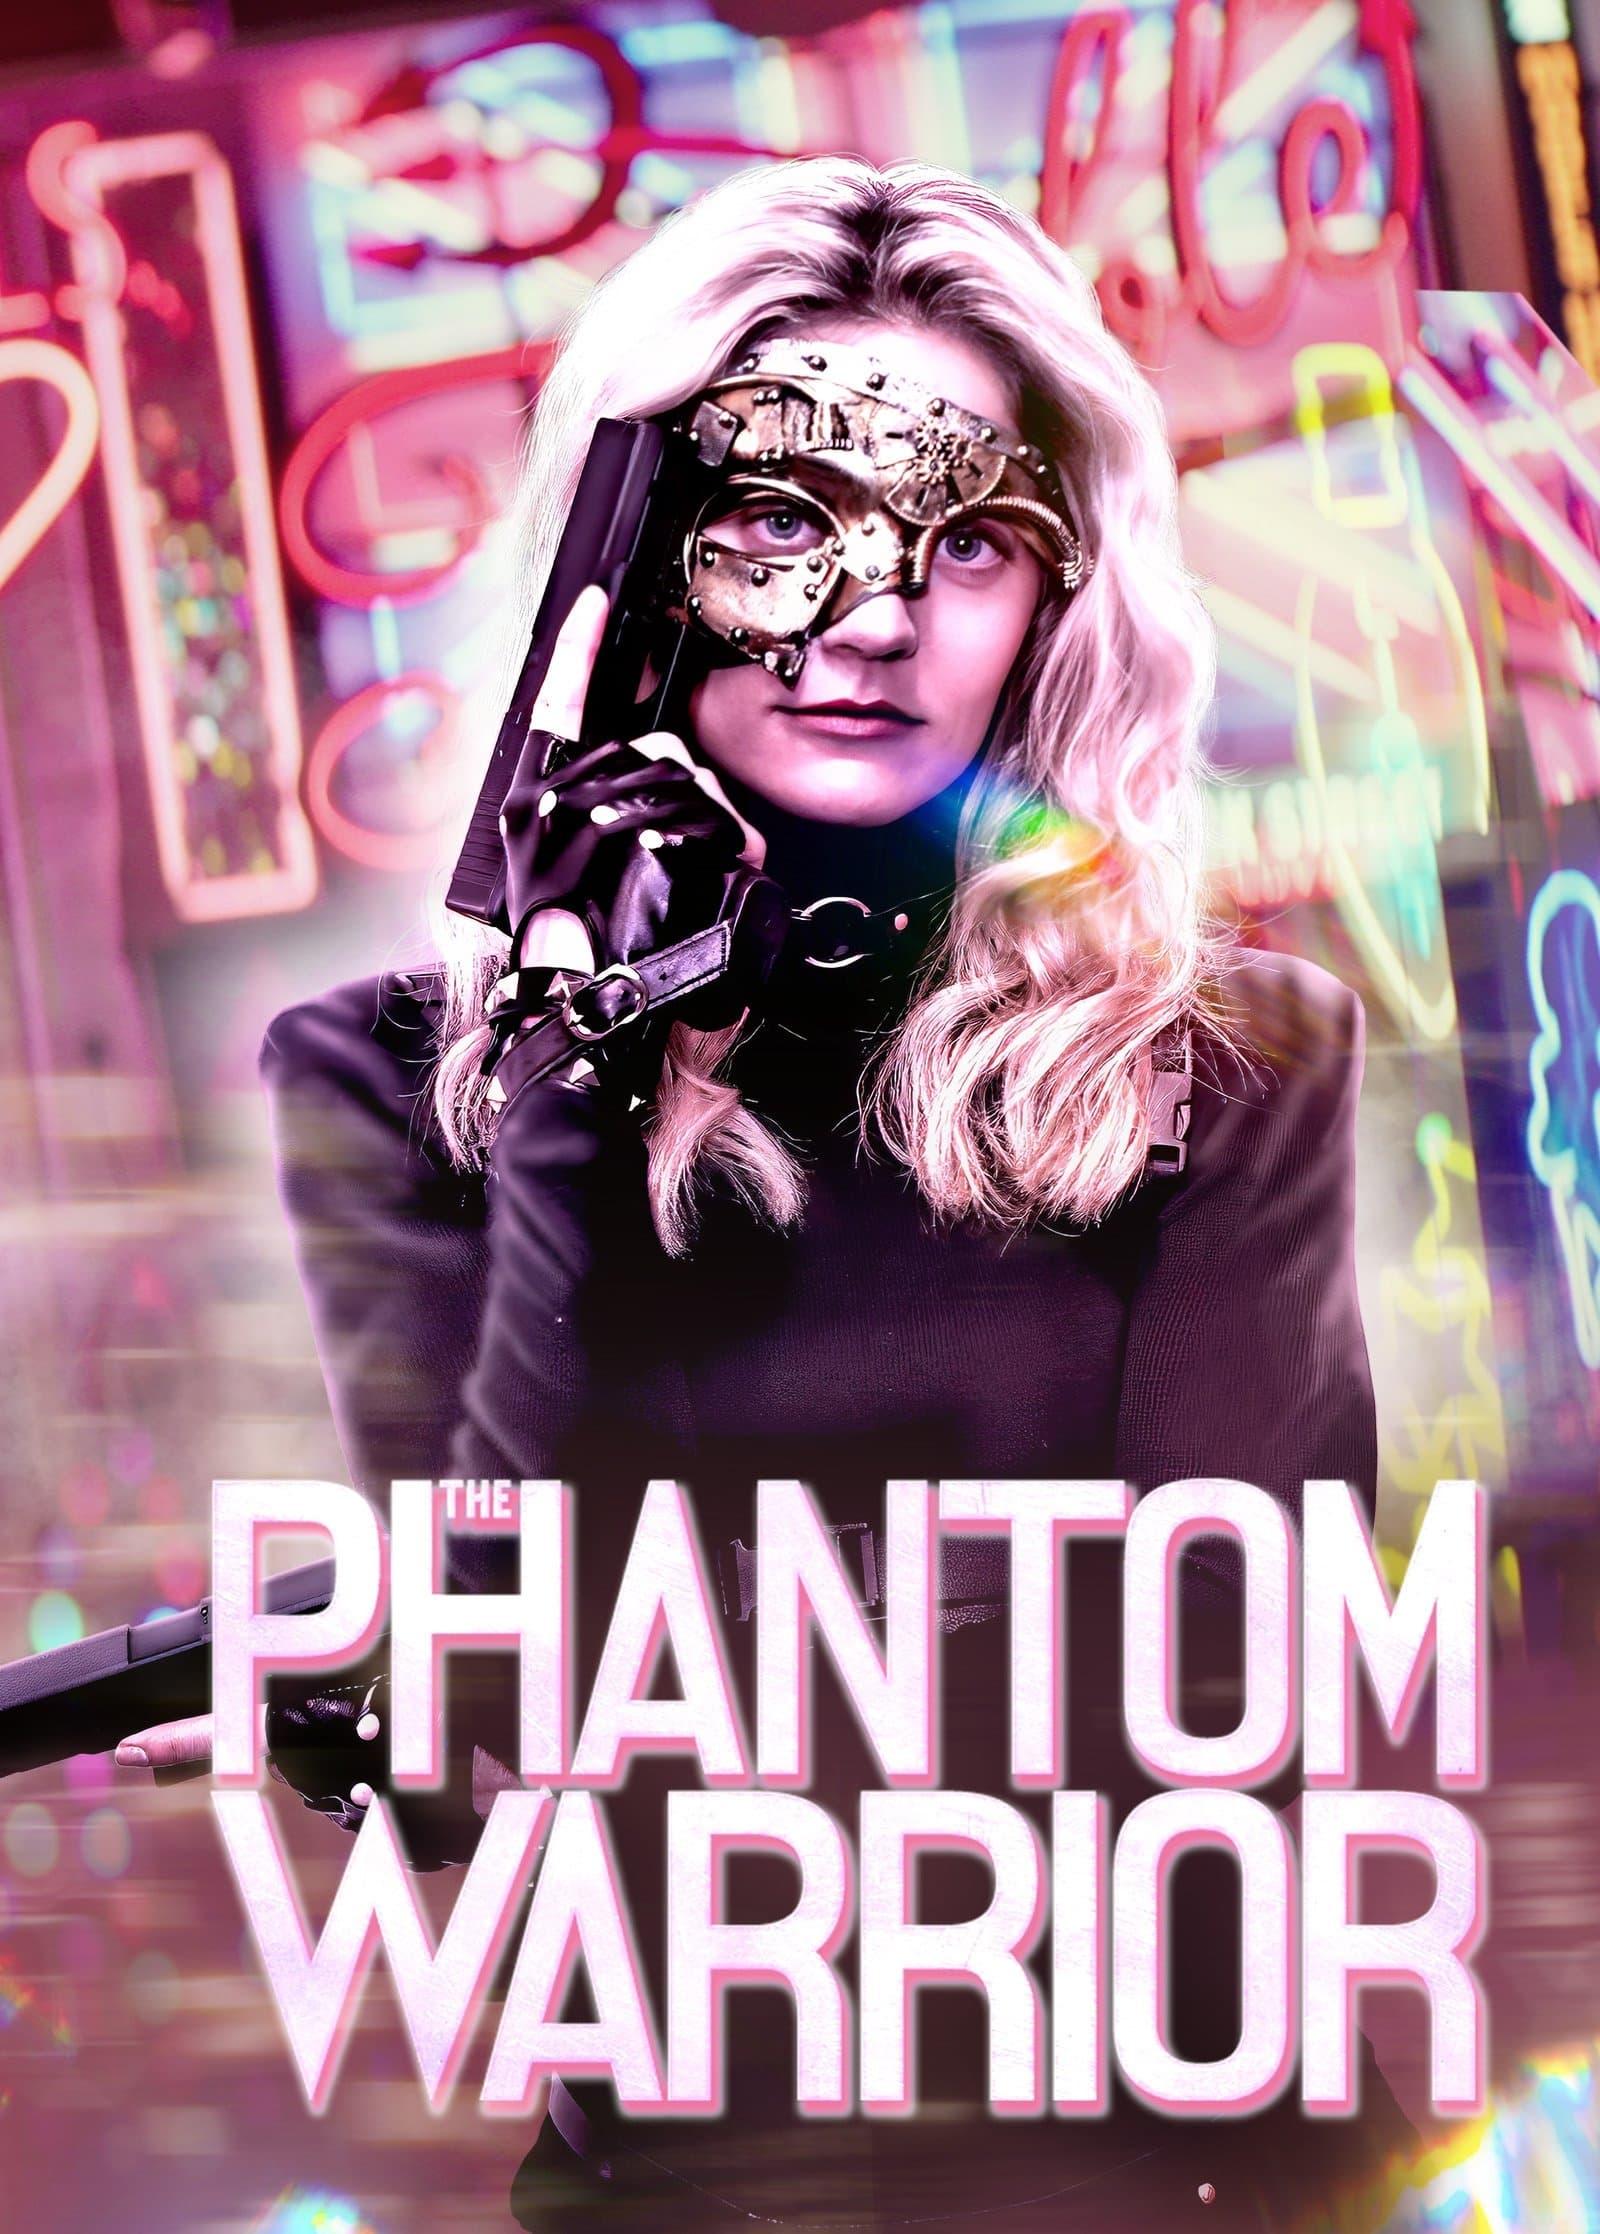 The Phantom Warrior poster